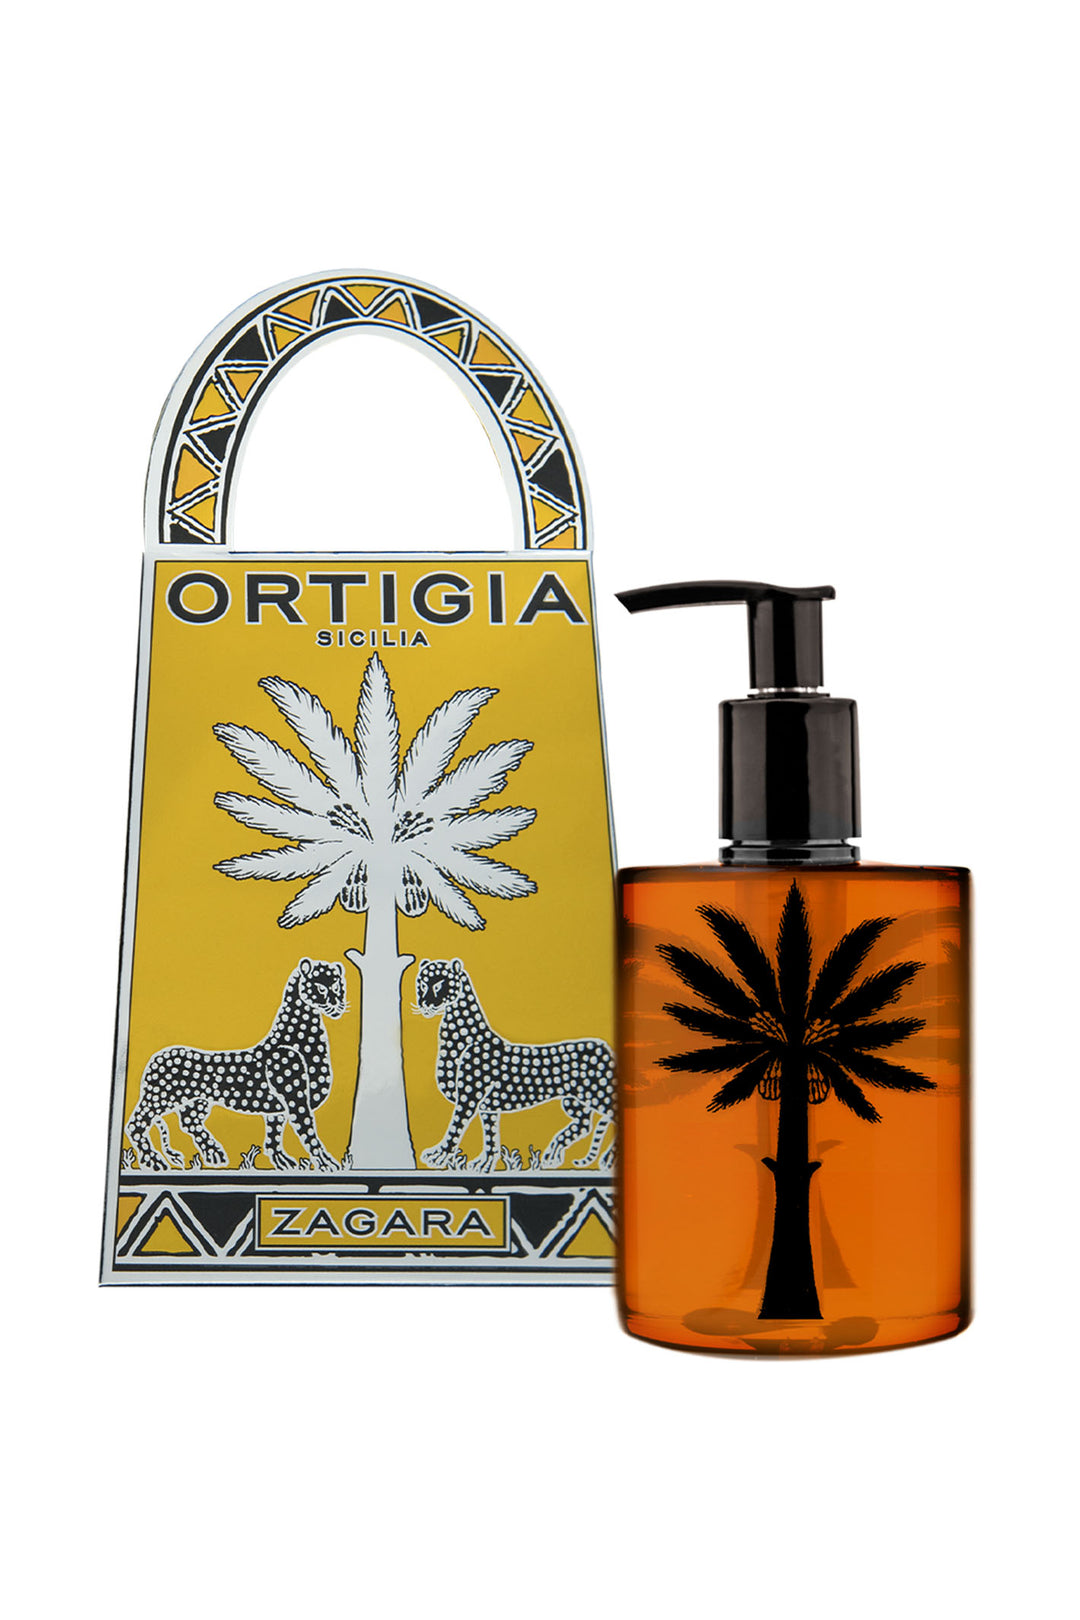 Ortigia Sicilia Zagara Liquid Soap 300ml - Olivia Grace Fashion